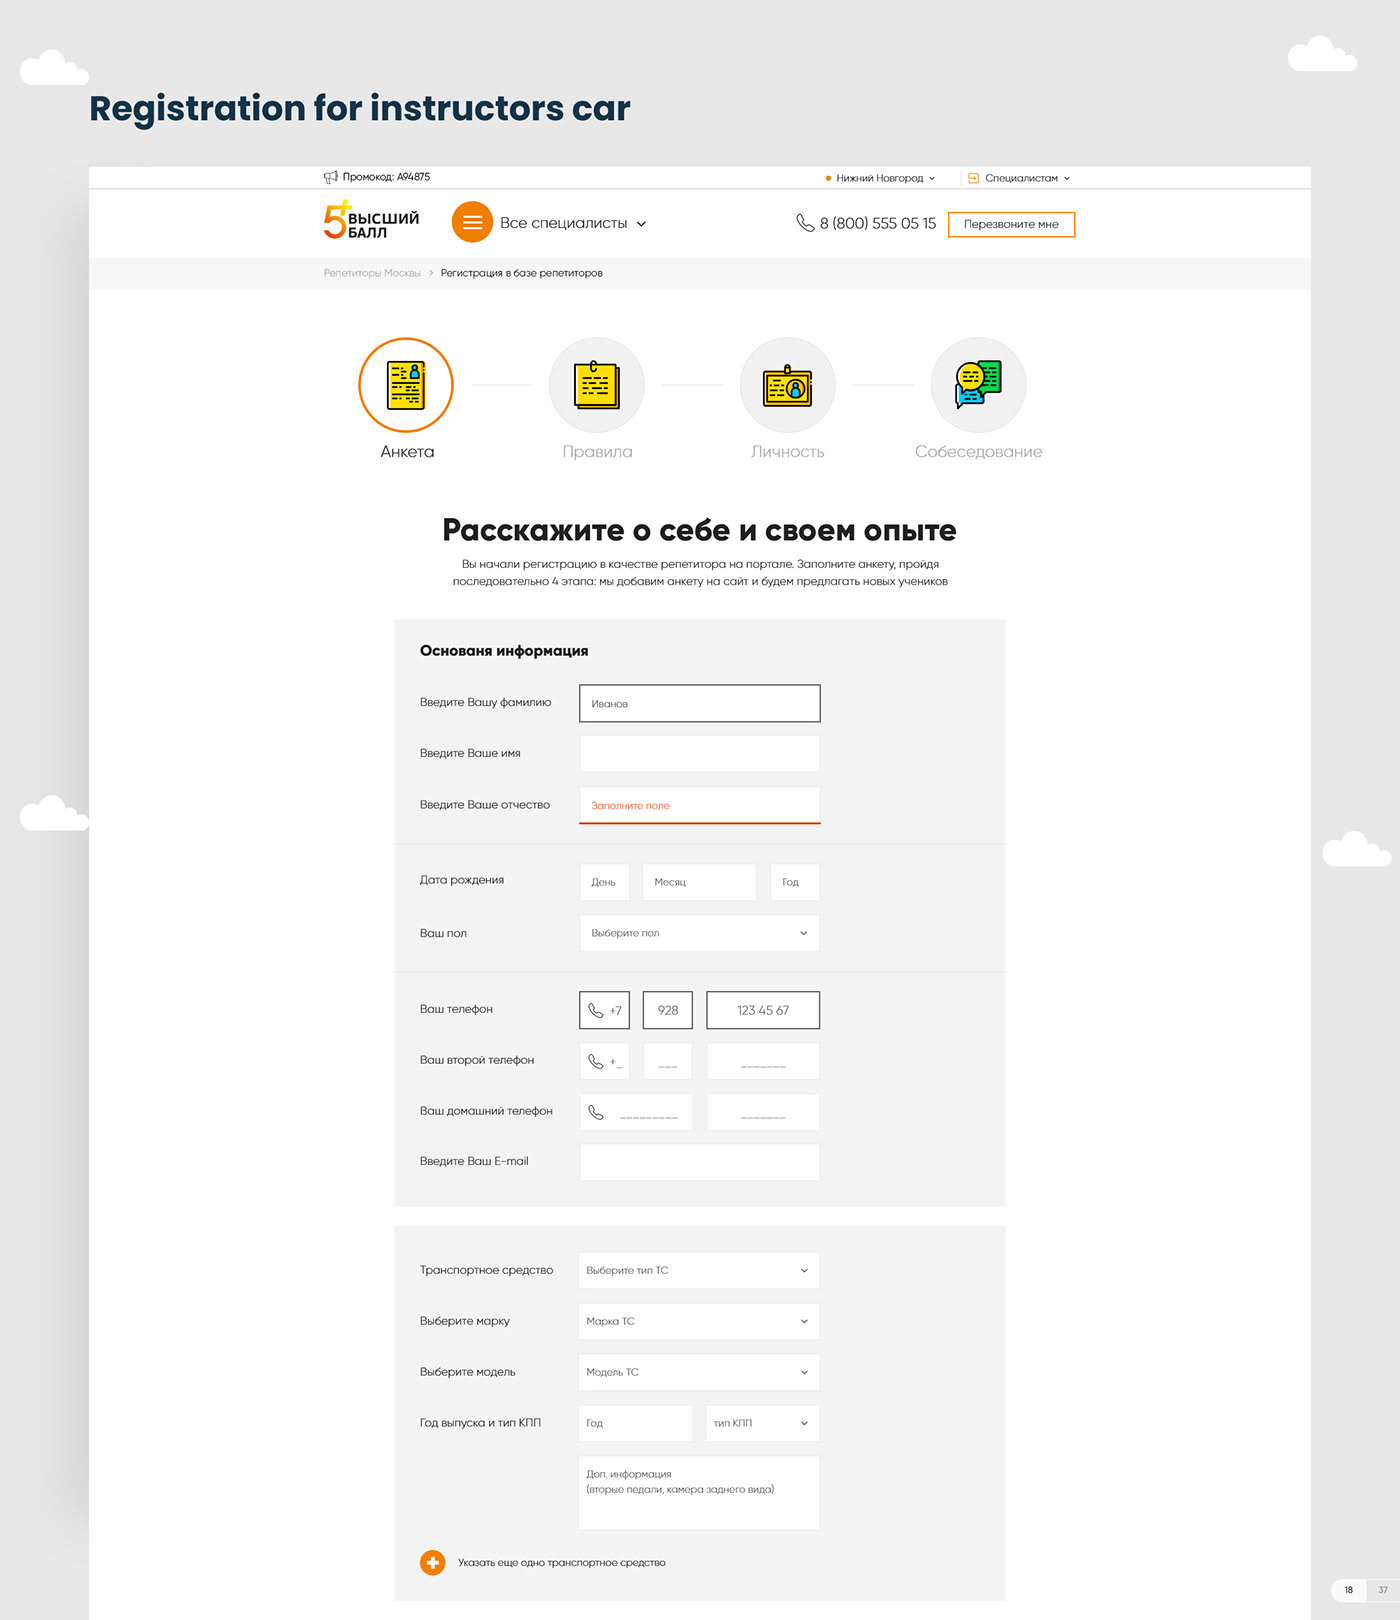 tutor professional search design Coach web site design UI user interface Platform repairman